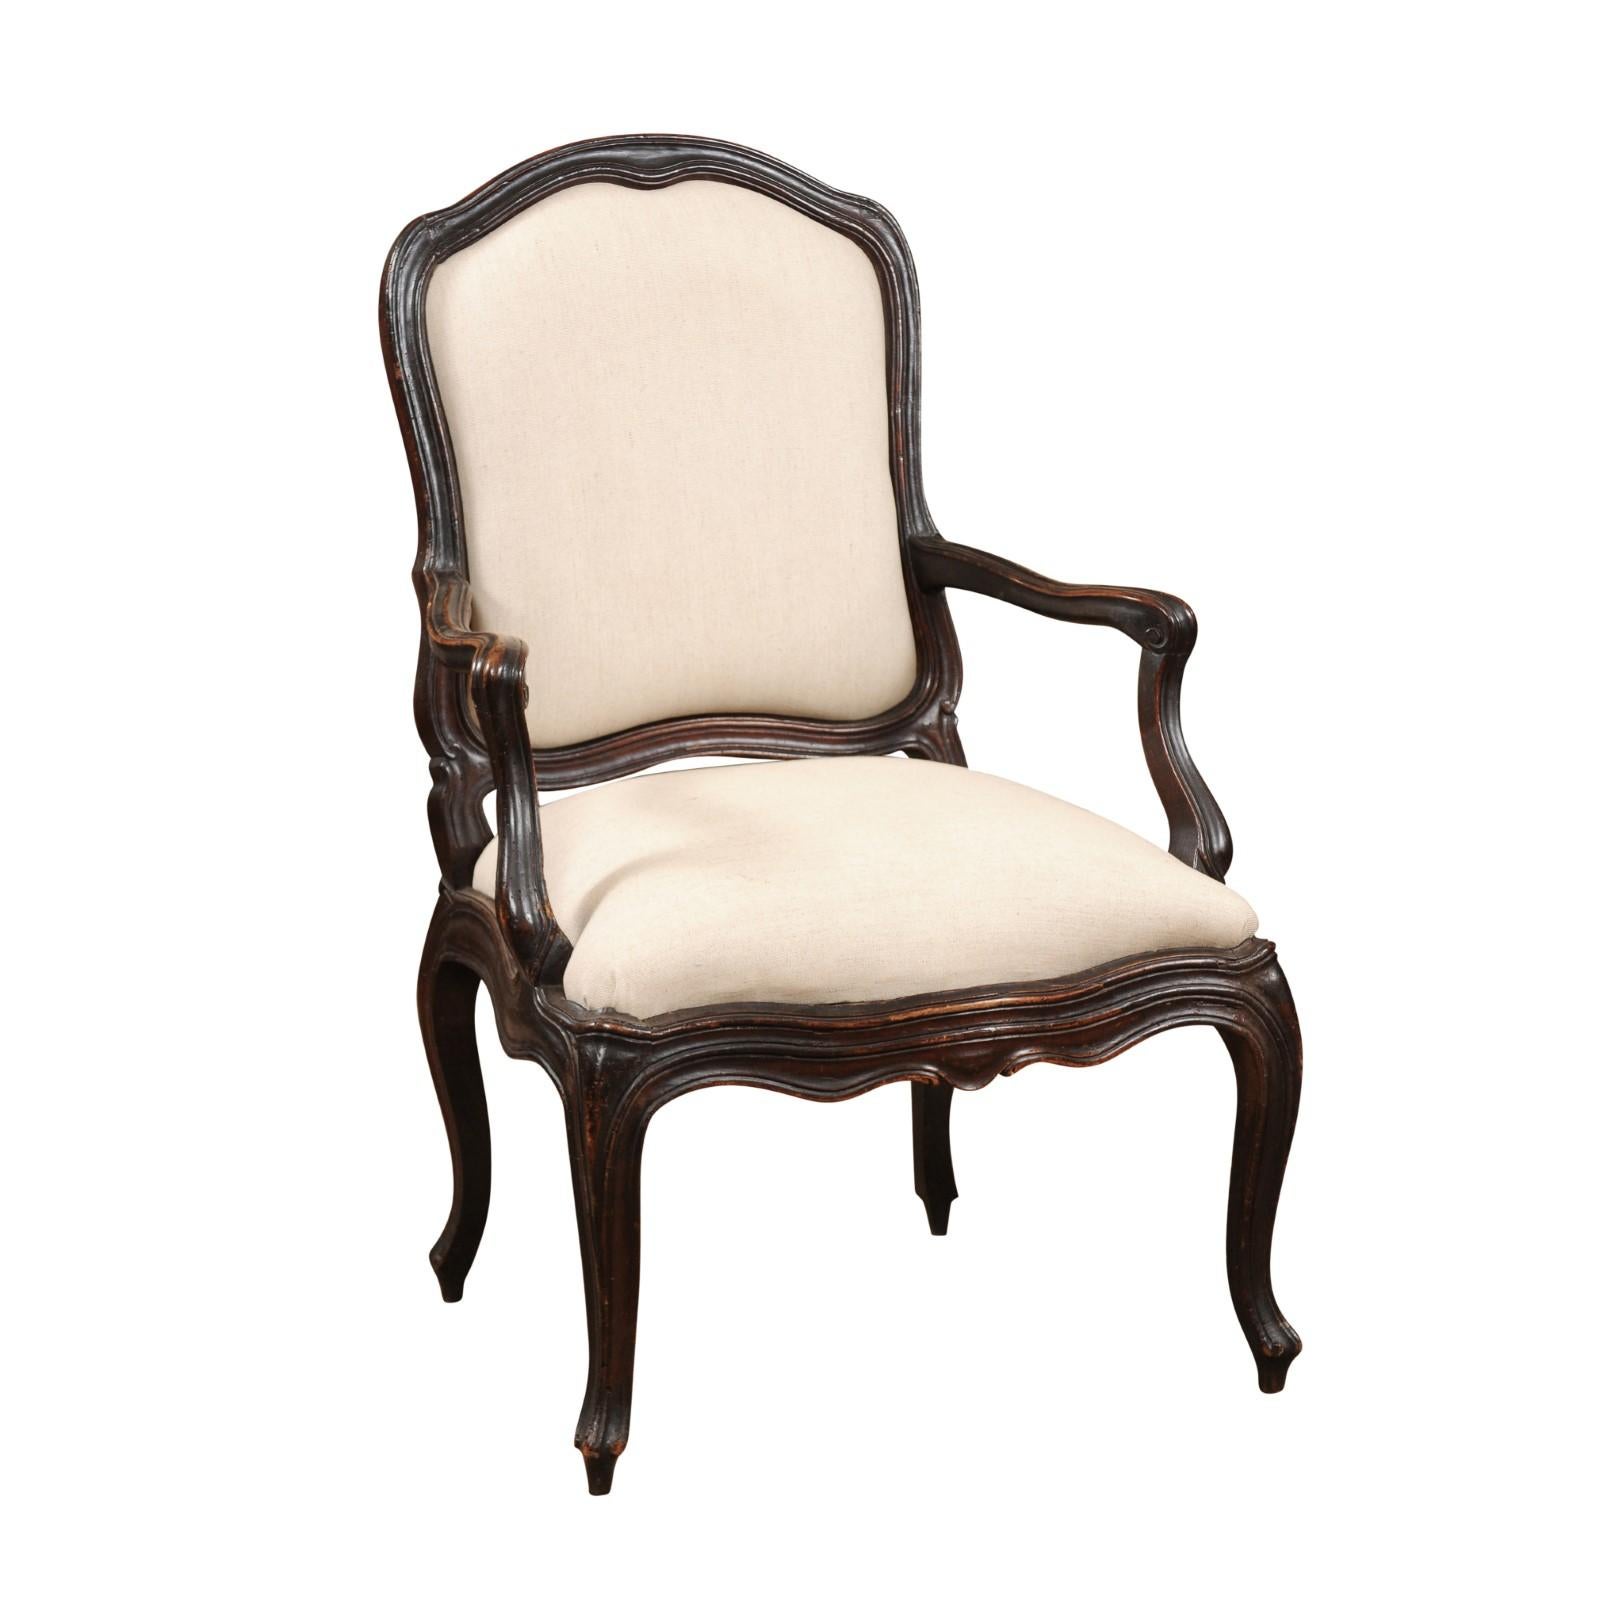 Pair of Rococo Period walnut armchairs, Genova, Italy Mid-18th Century. 2 pairs available.